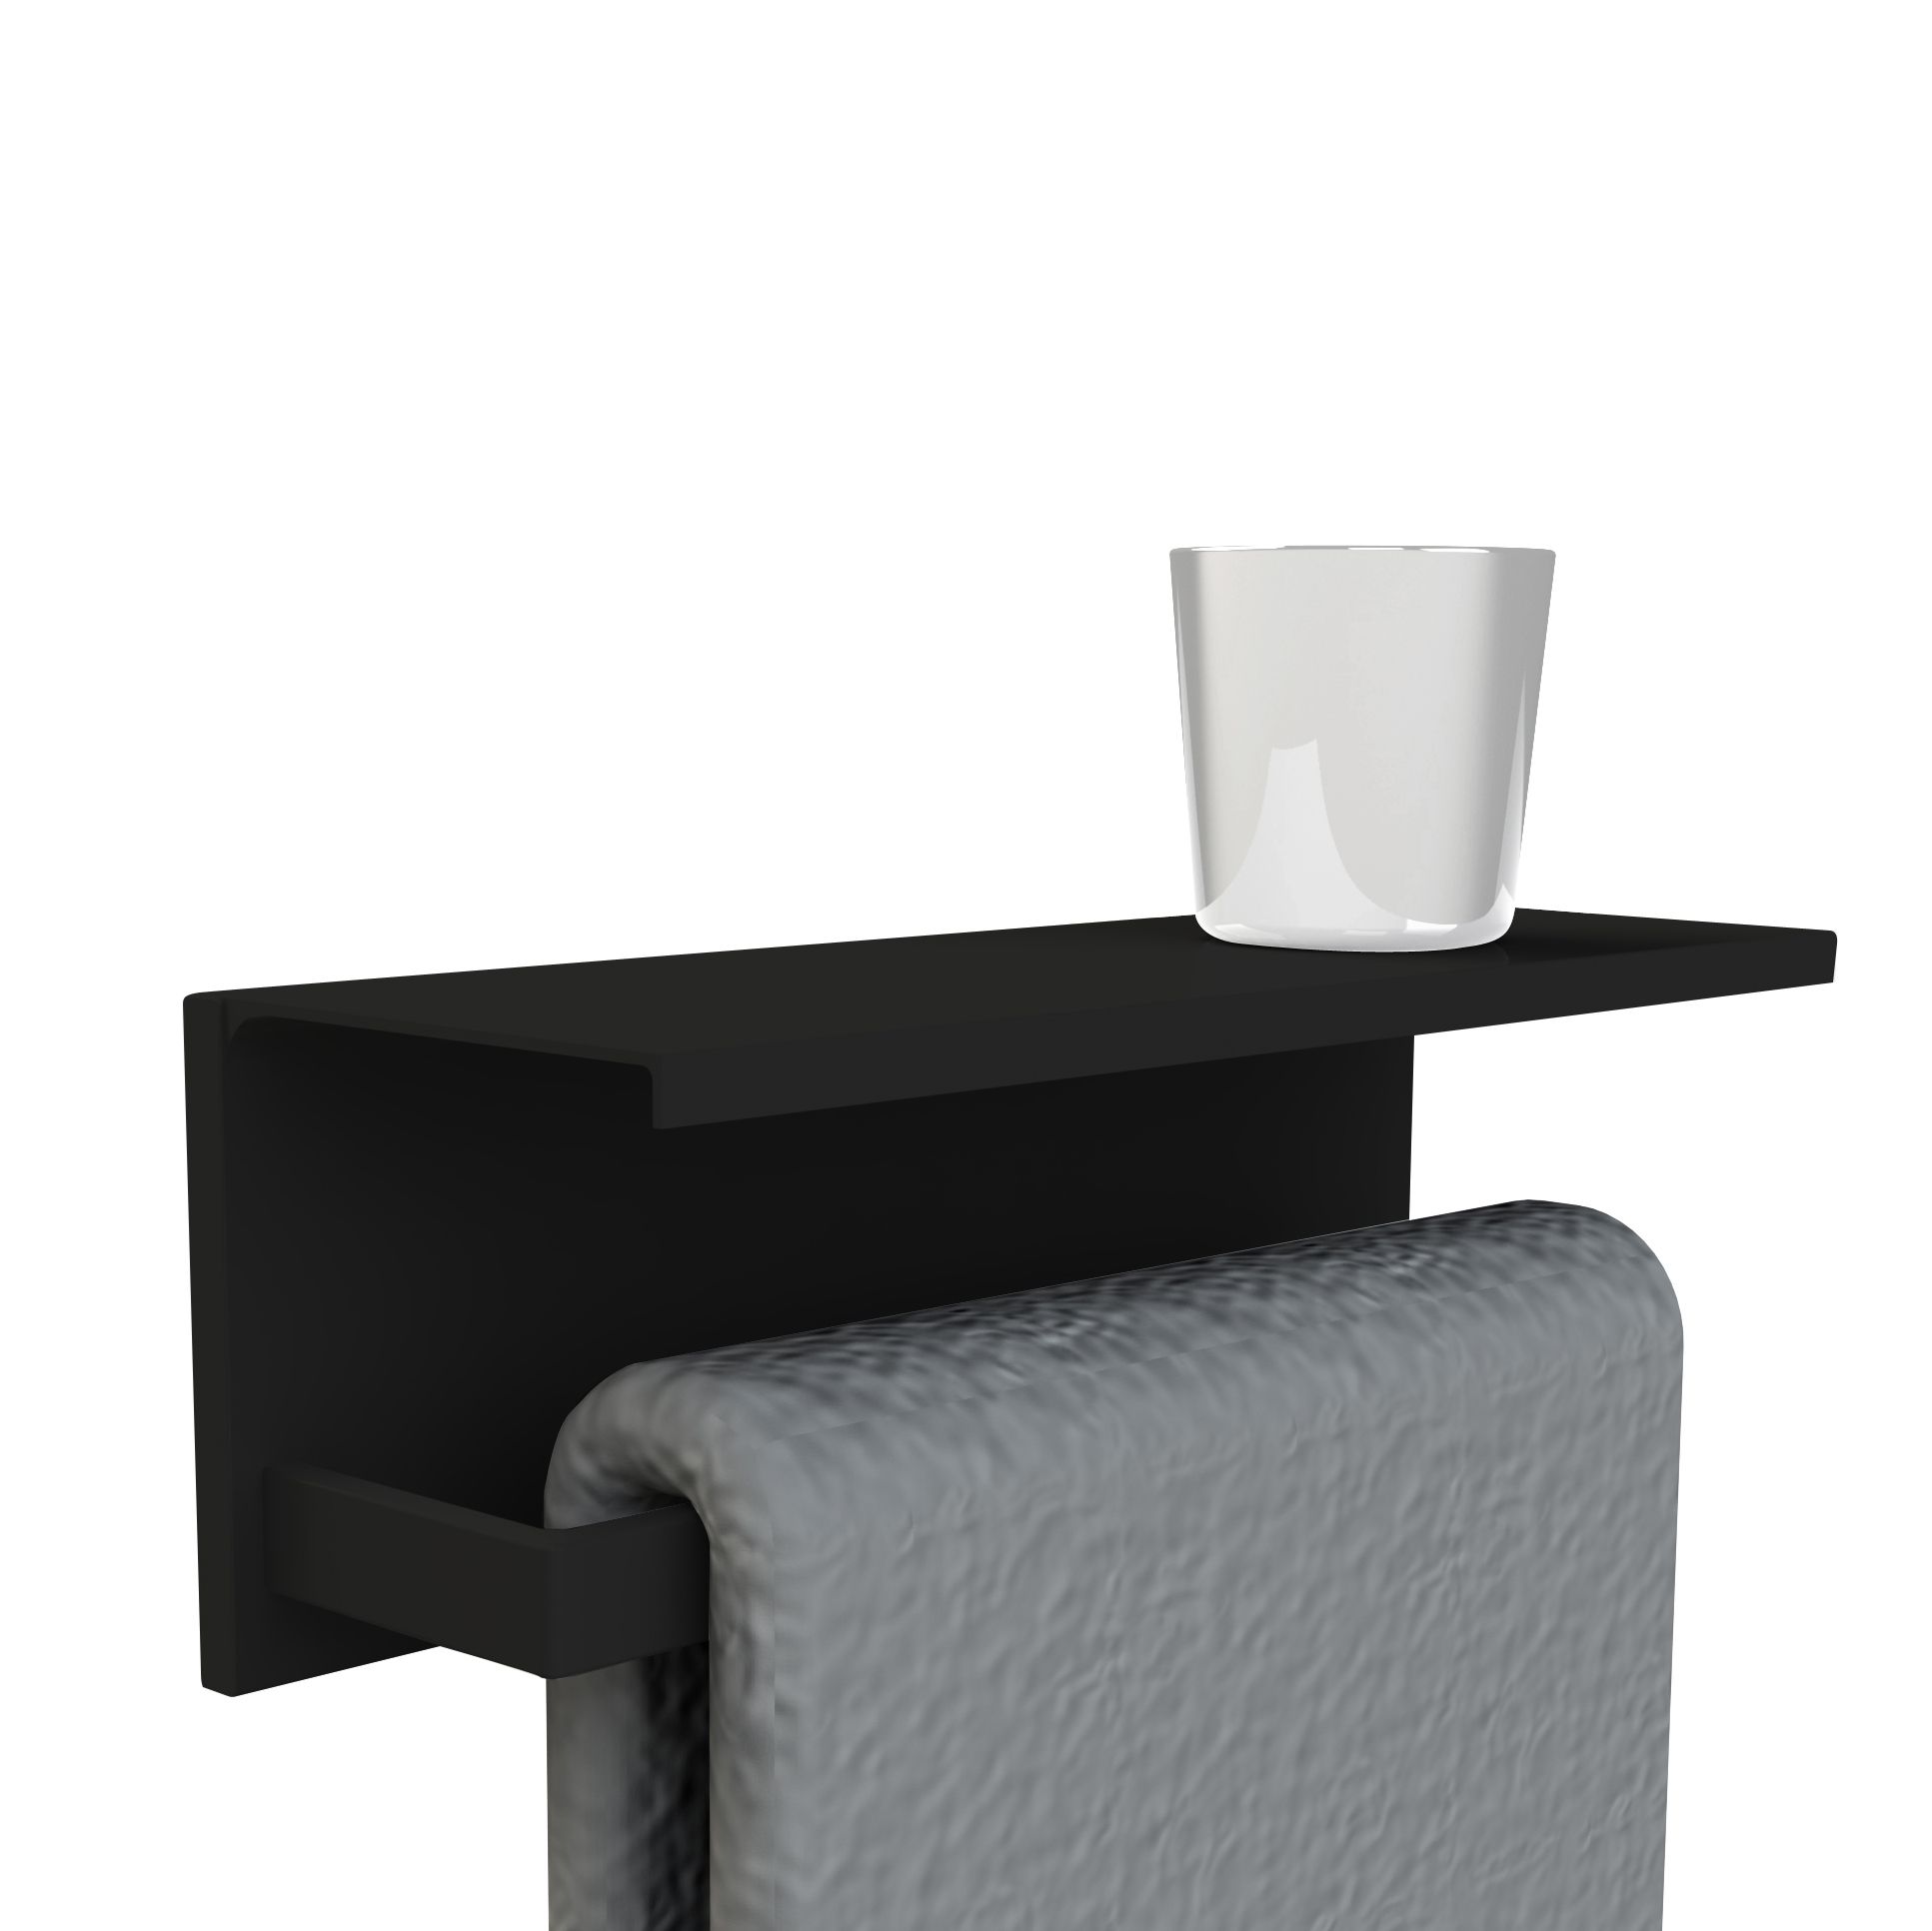  Shelf  + Towel rail